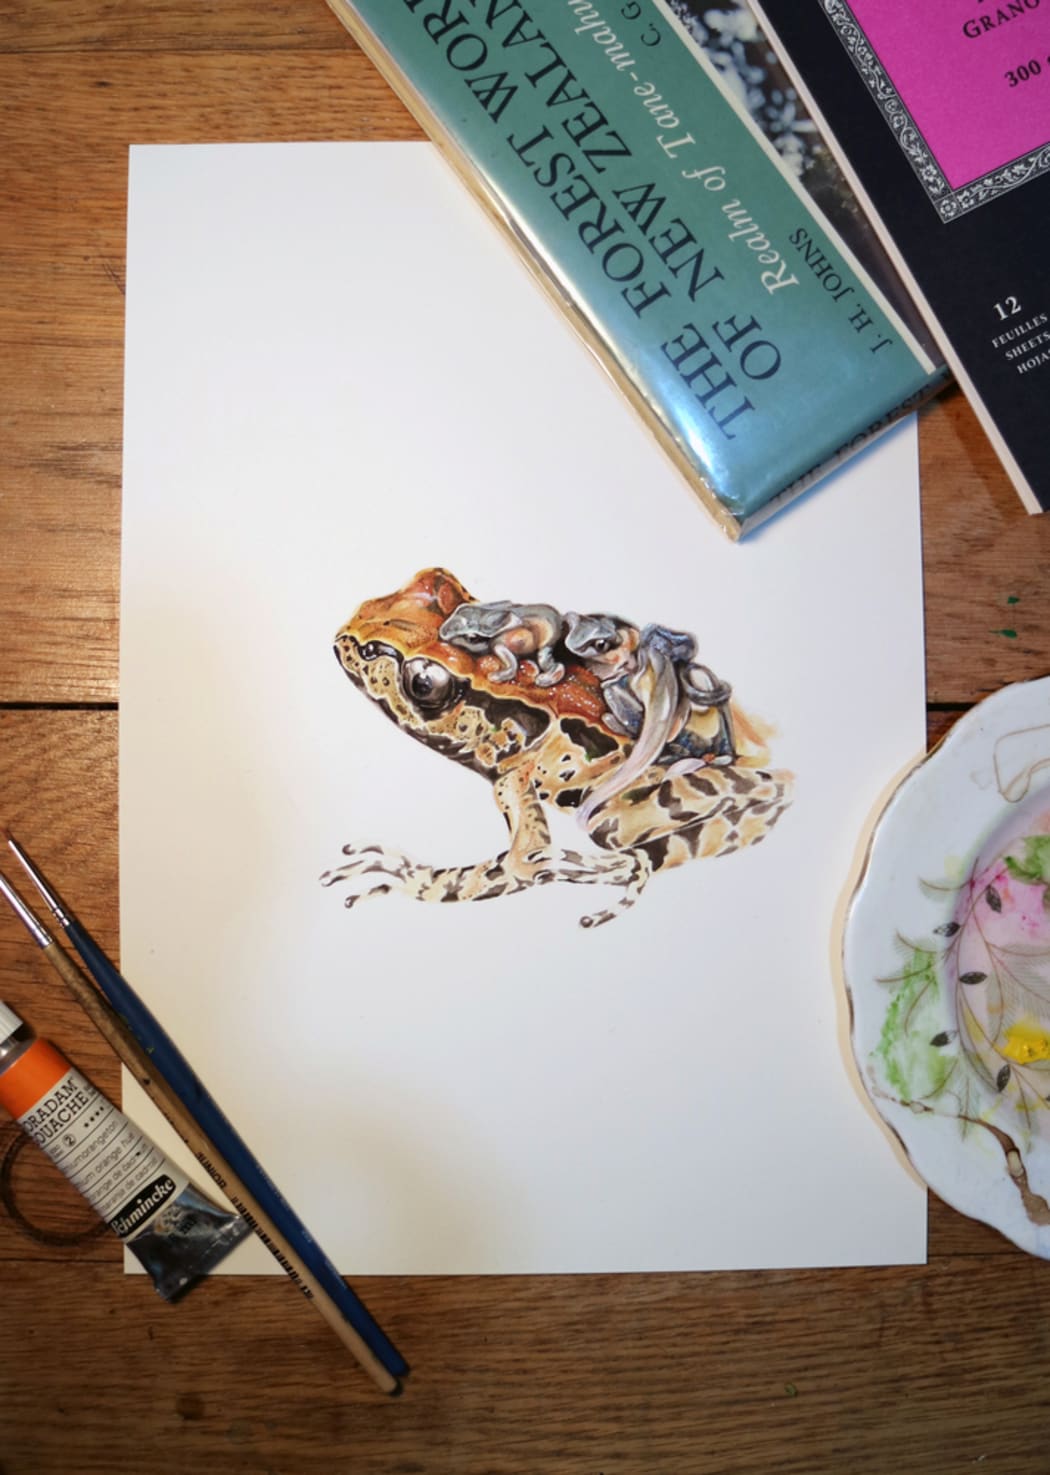 Pepeketua / Archey’s frog with froglets